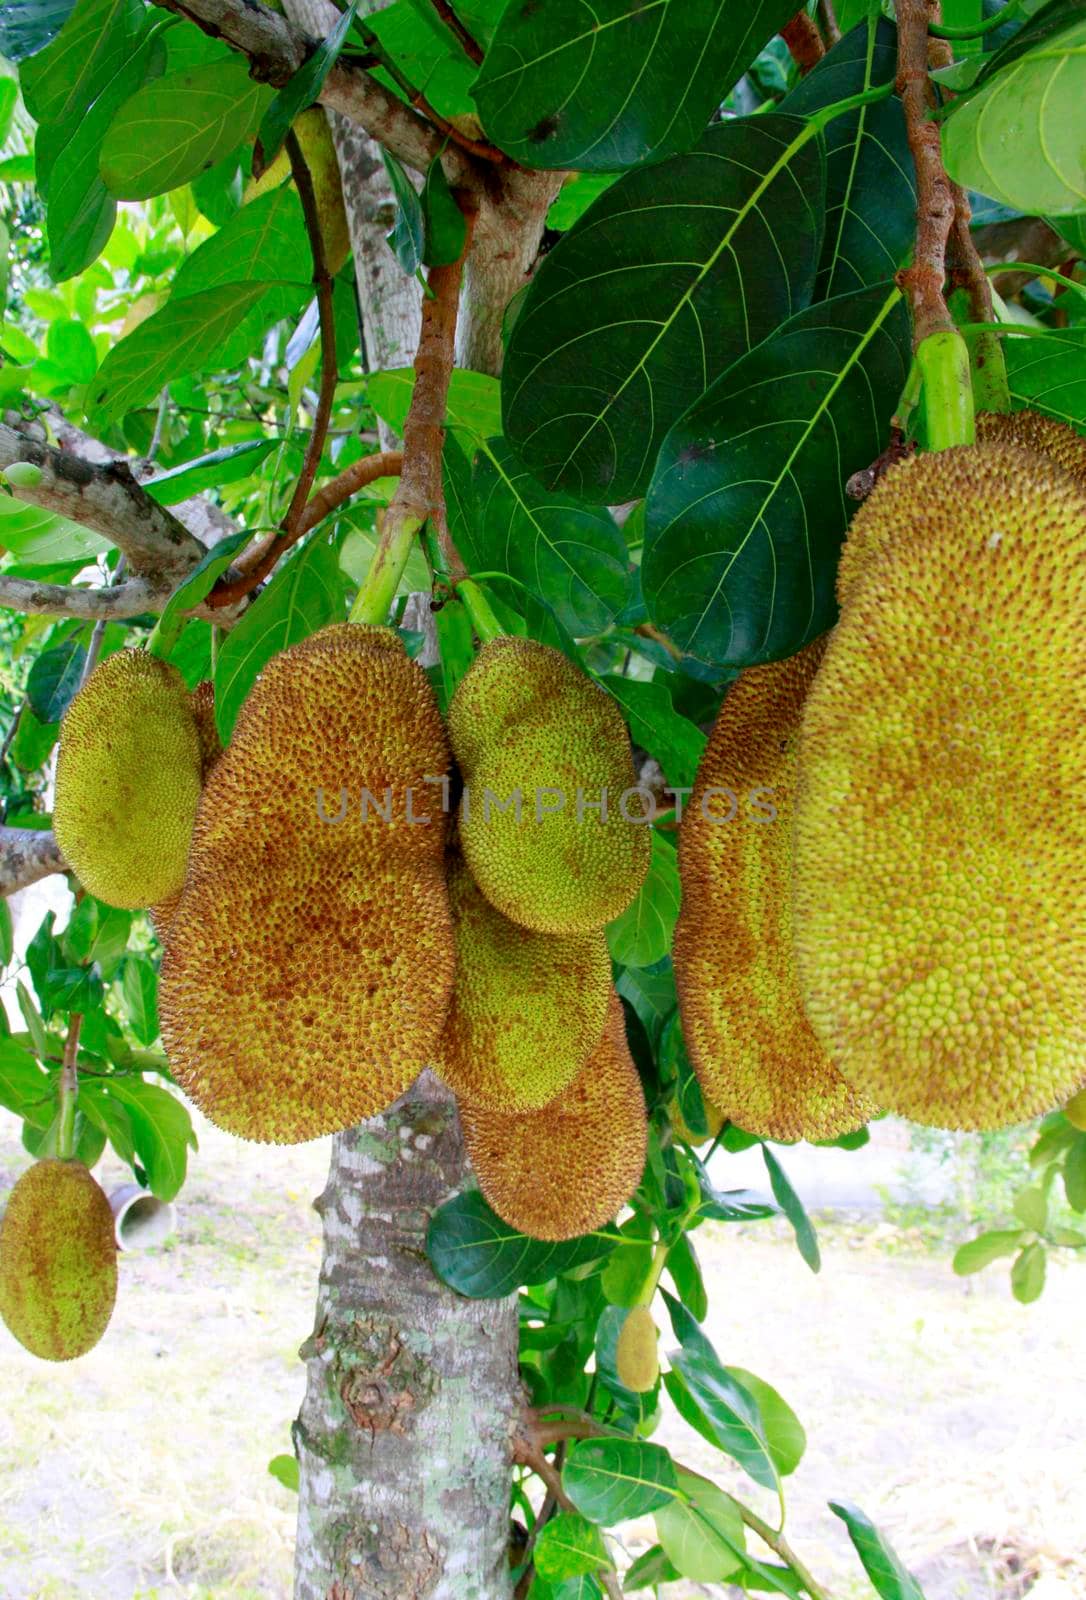 salvador, bahia / brazil - october 28, 2013: jackfruit and its fruits seen in the city of Salvador.